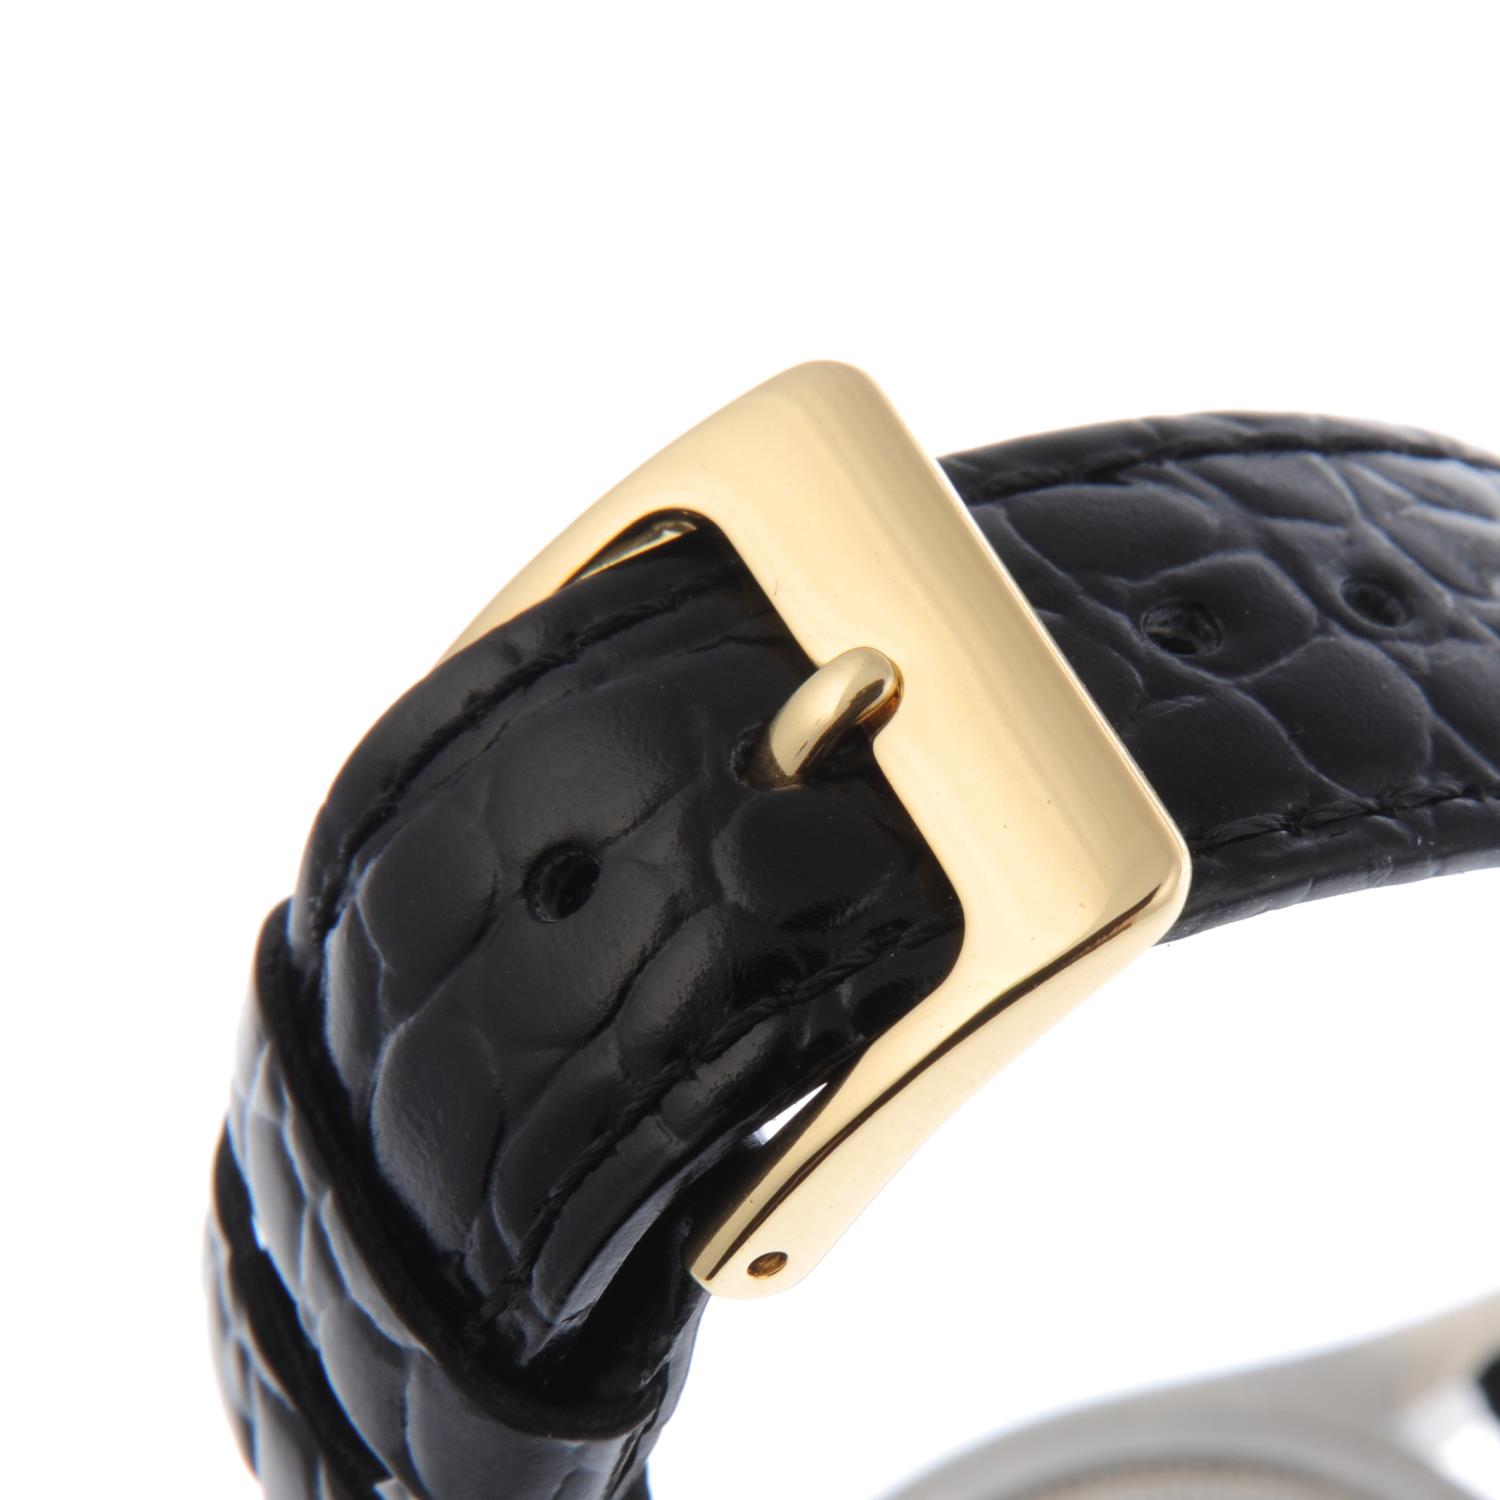 ROLEX - a gentleman's Oysterdate Precision wrist watch. - Image 2 of 4